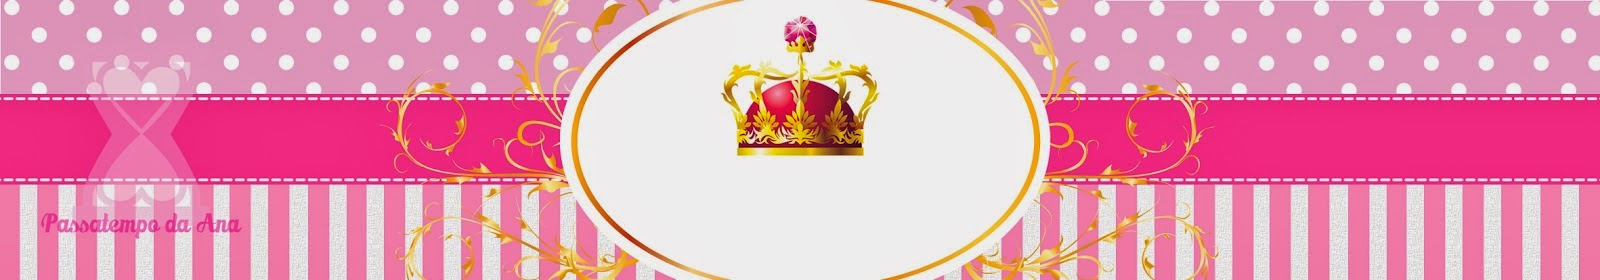 Etiqueta para Imprimir Gratis de Corona de Reina.